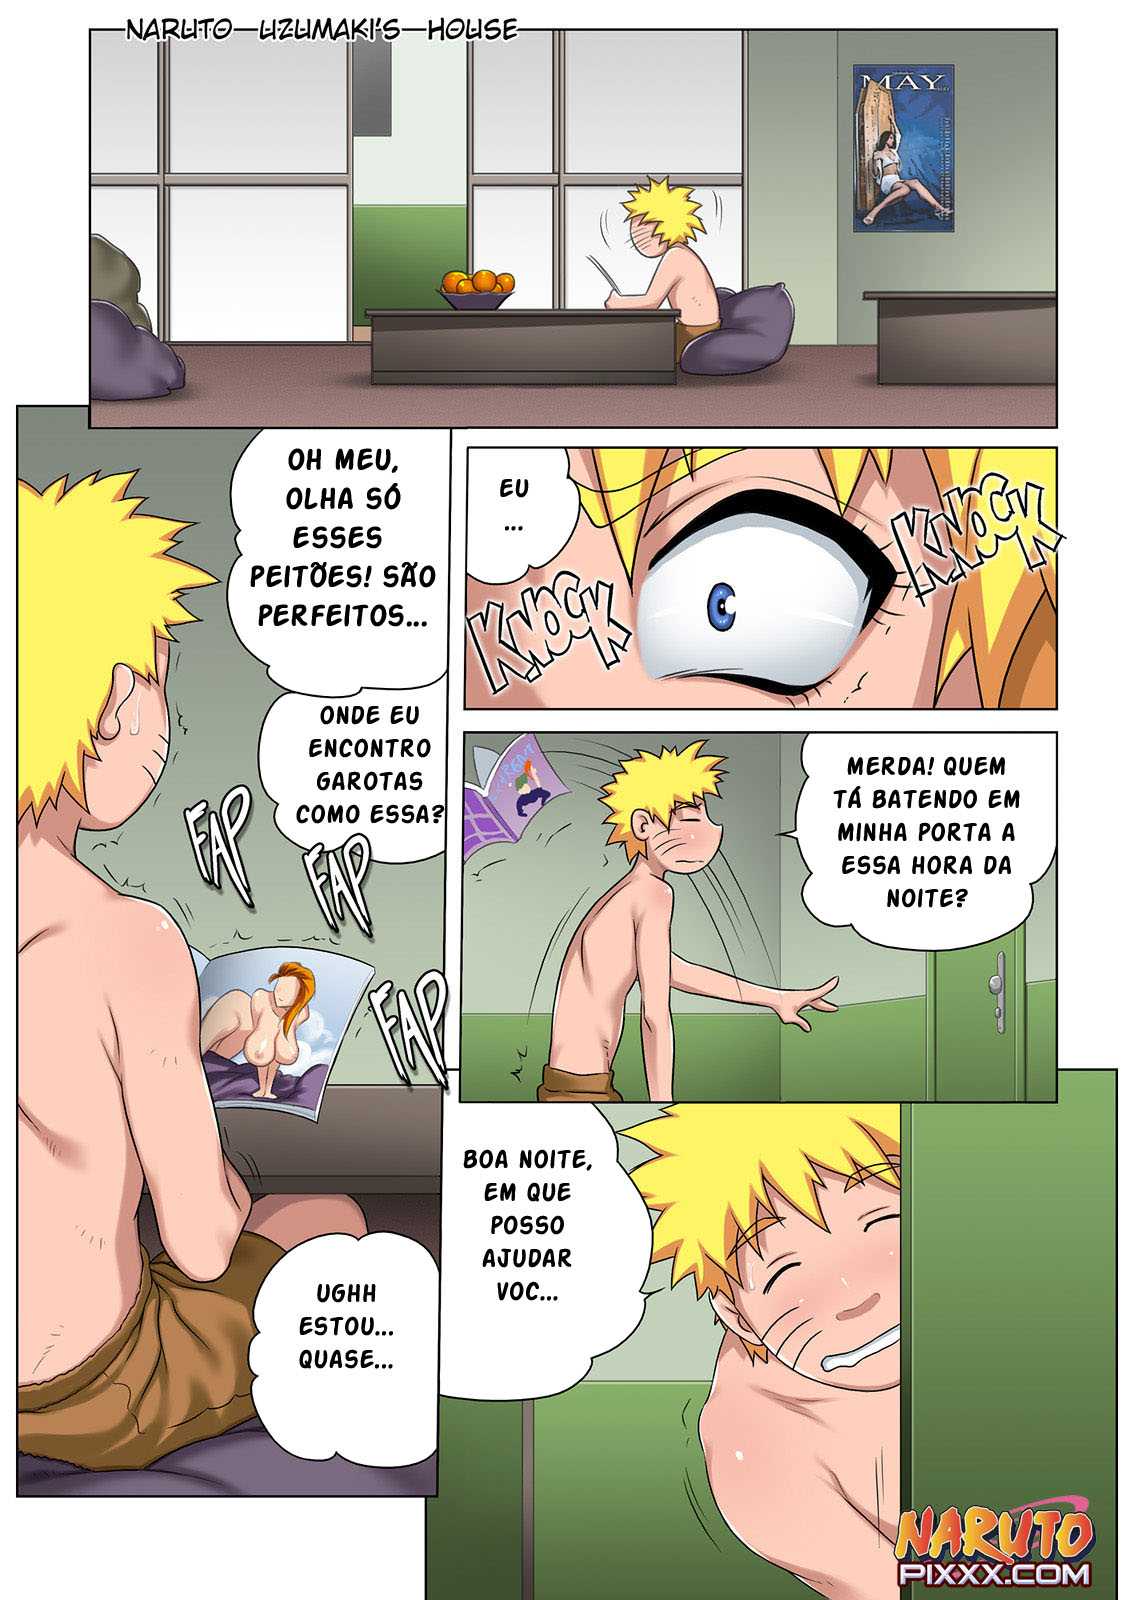 Sakura tem tudo que Naruto deseja - Foto 3